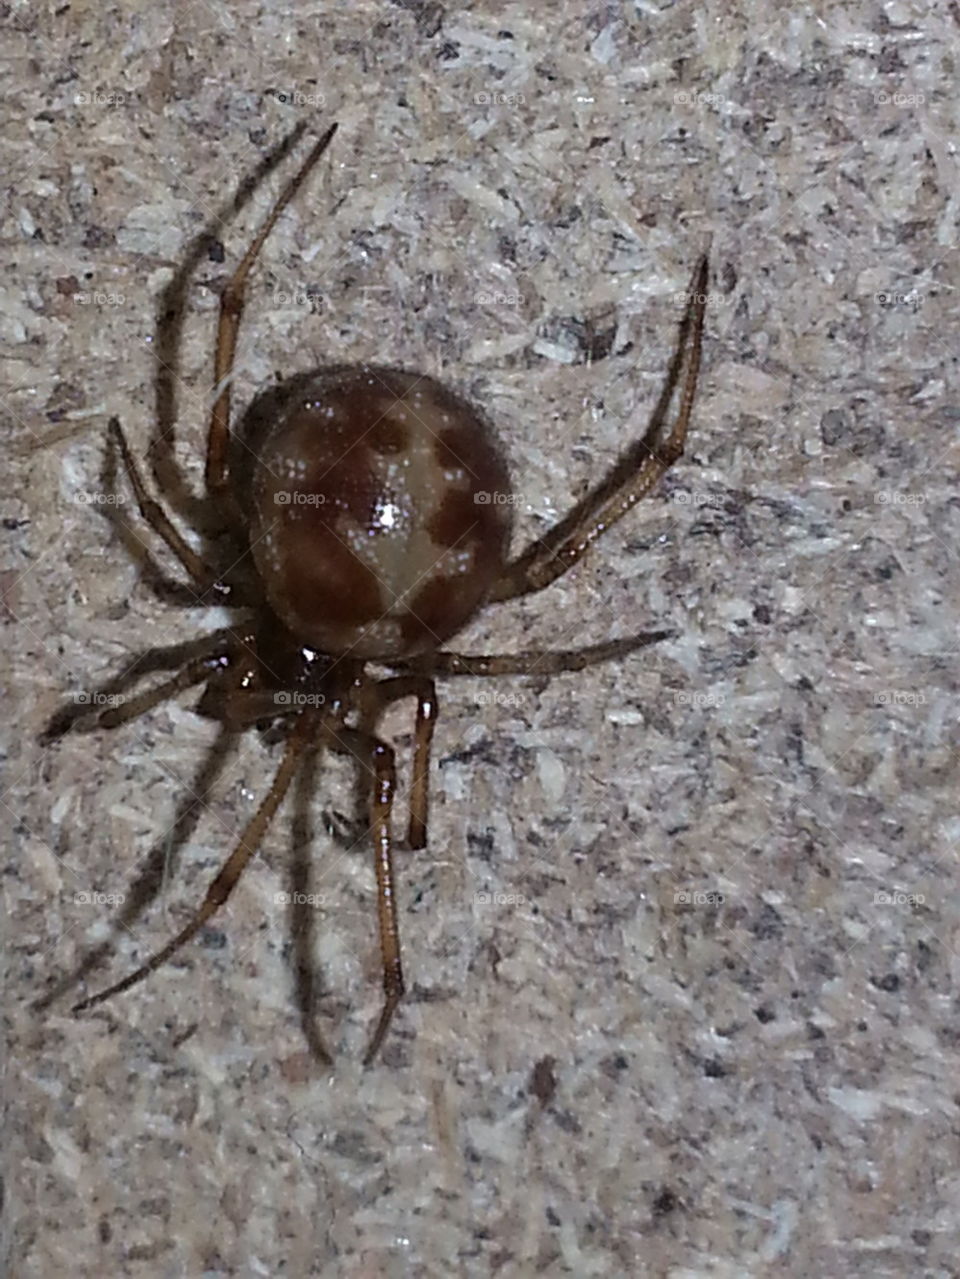 Spider, creepy crawler!